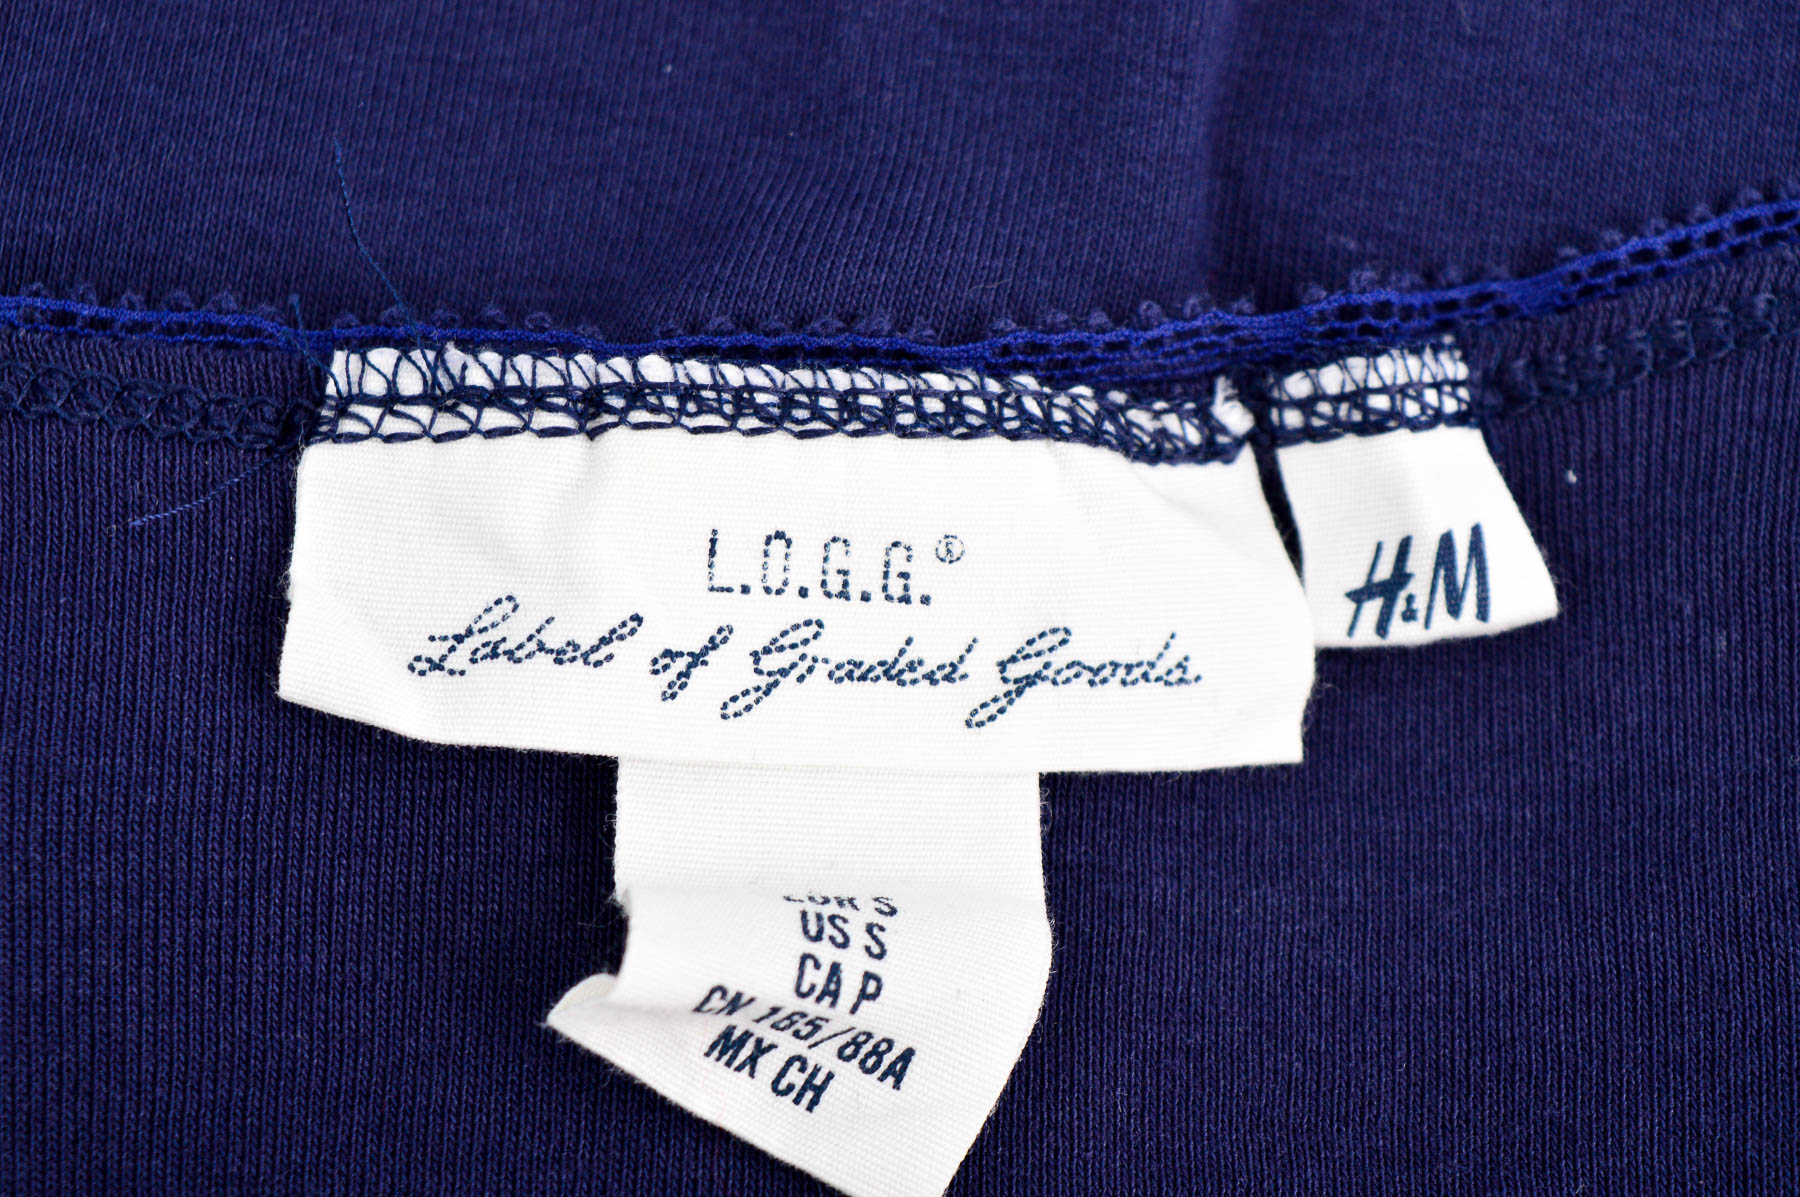 Women's blouse - L.O.G.G. - 2